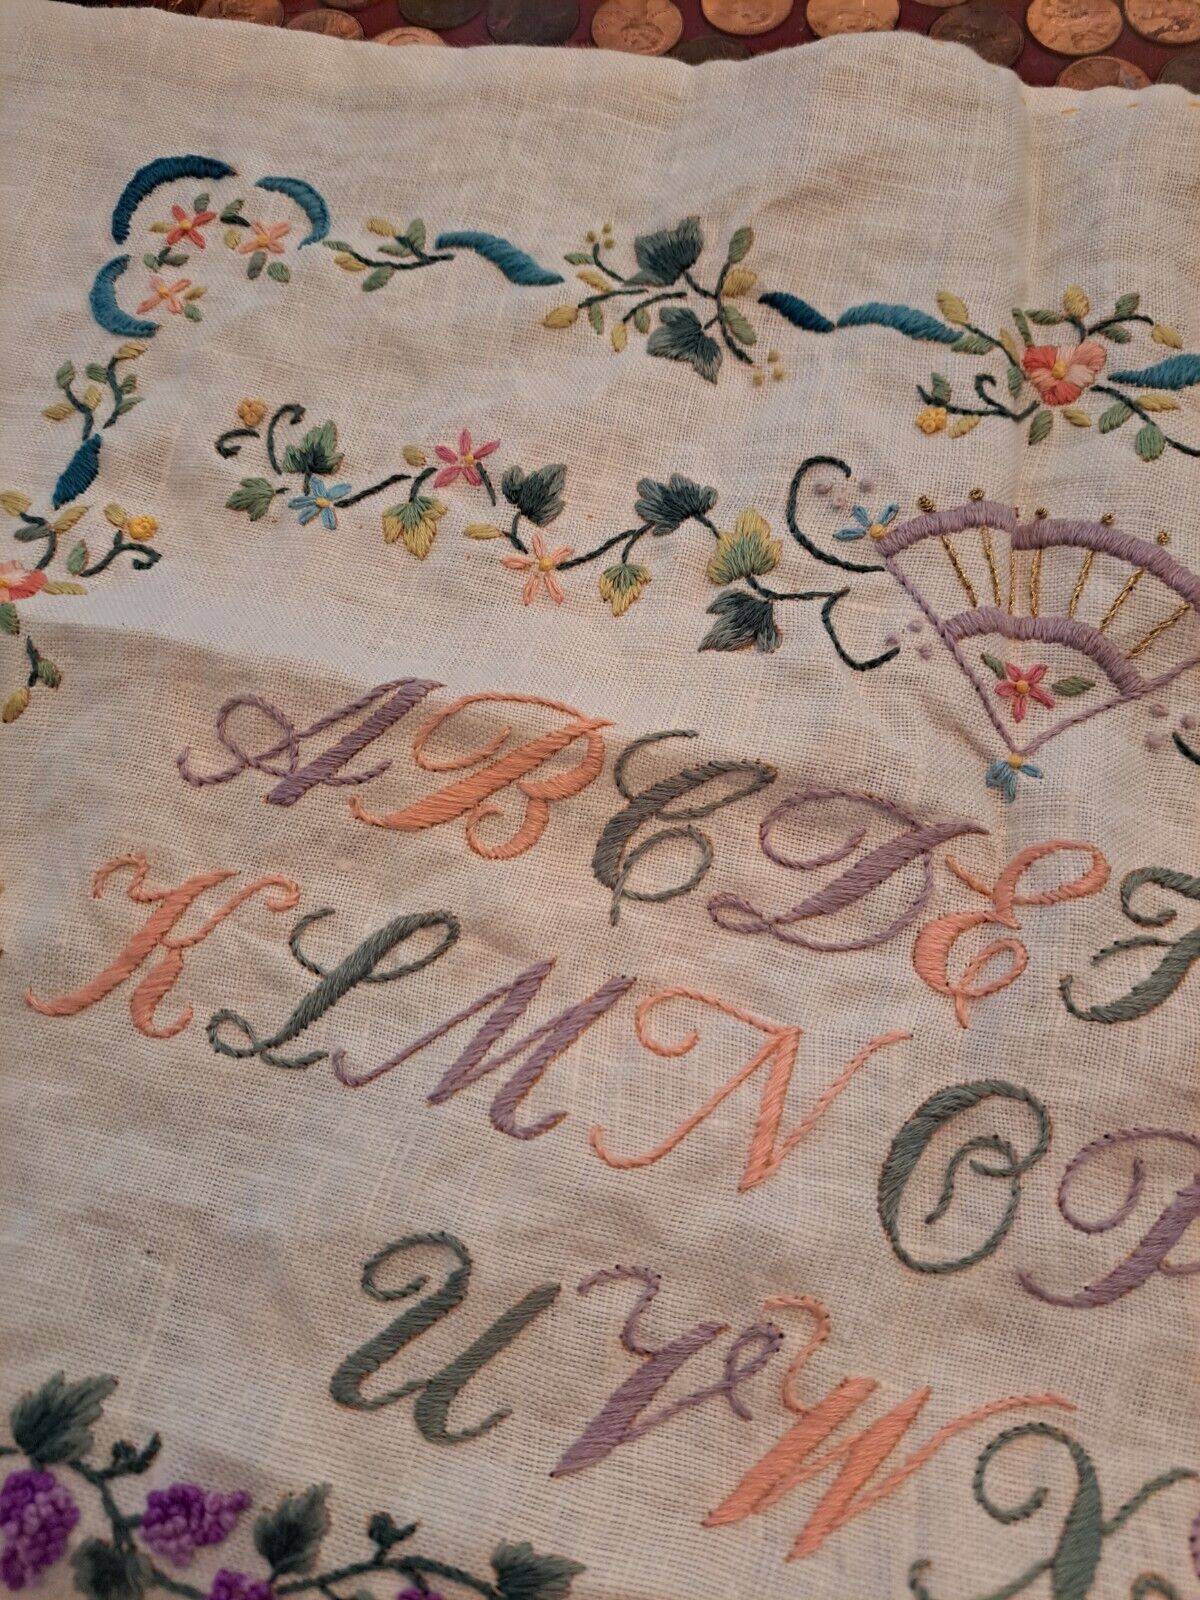 Embroidered Alphabet With Floral Border Vintage On Linen 21 X 18 Unframed